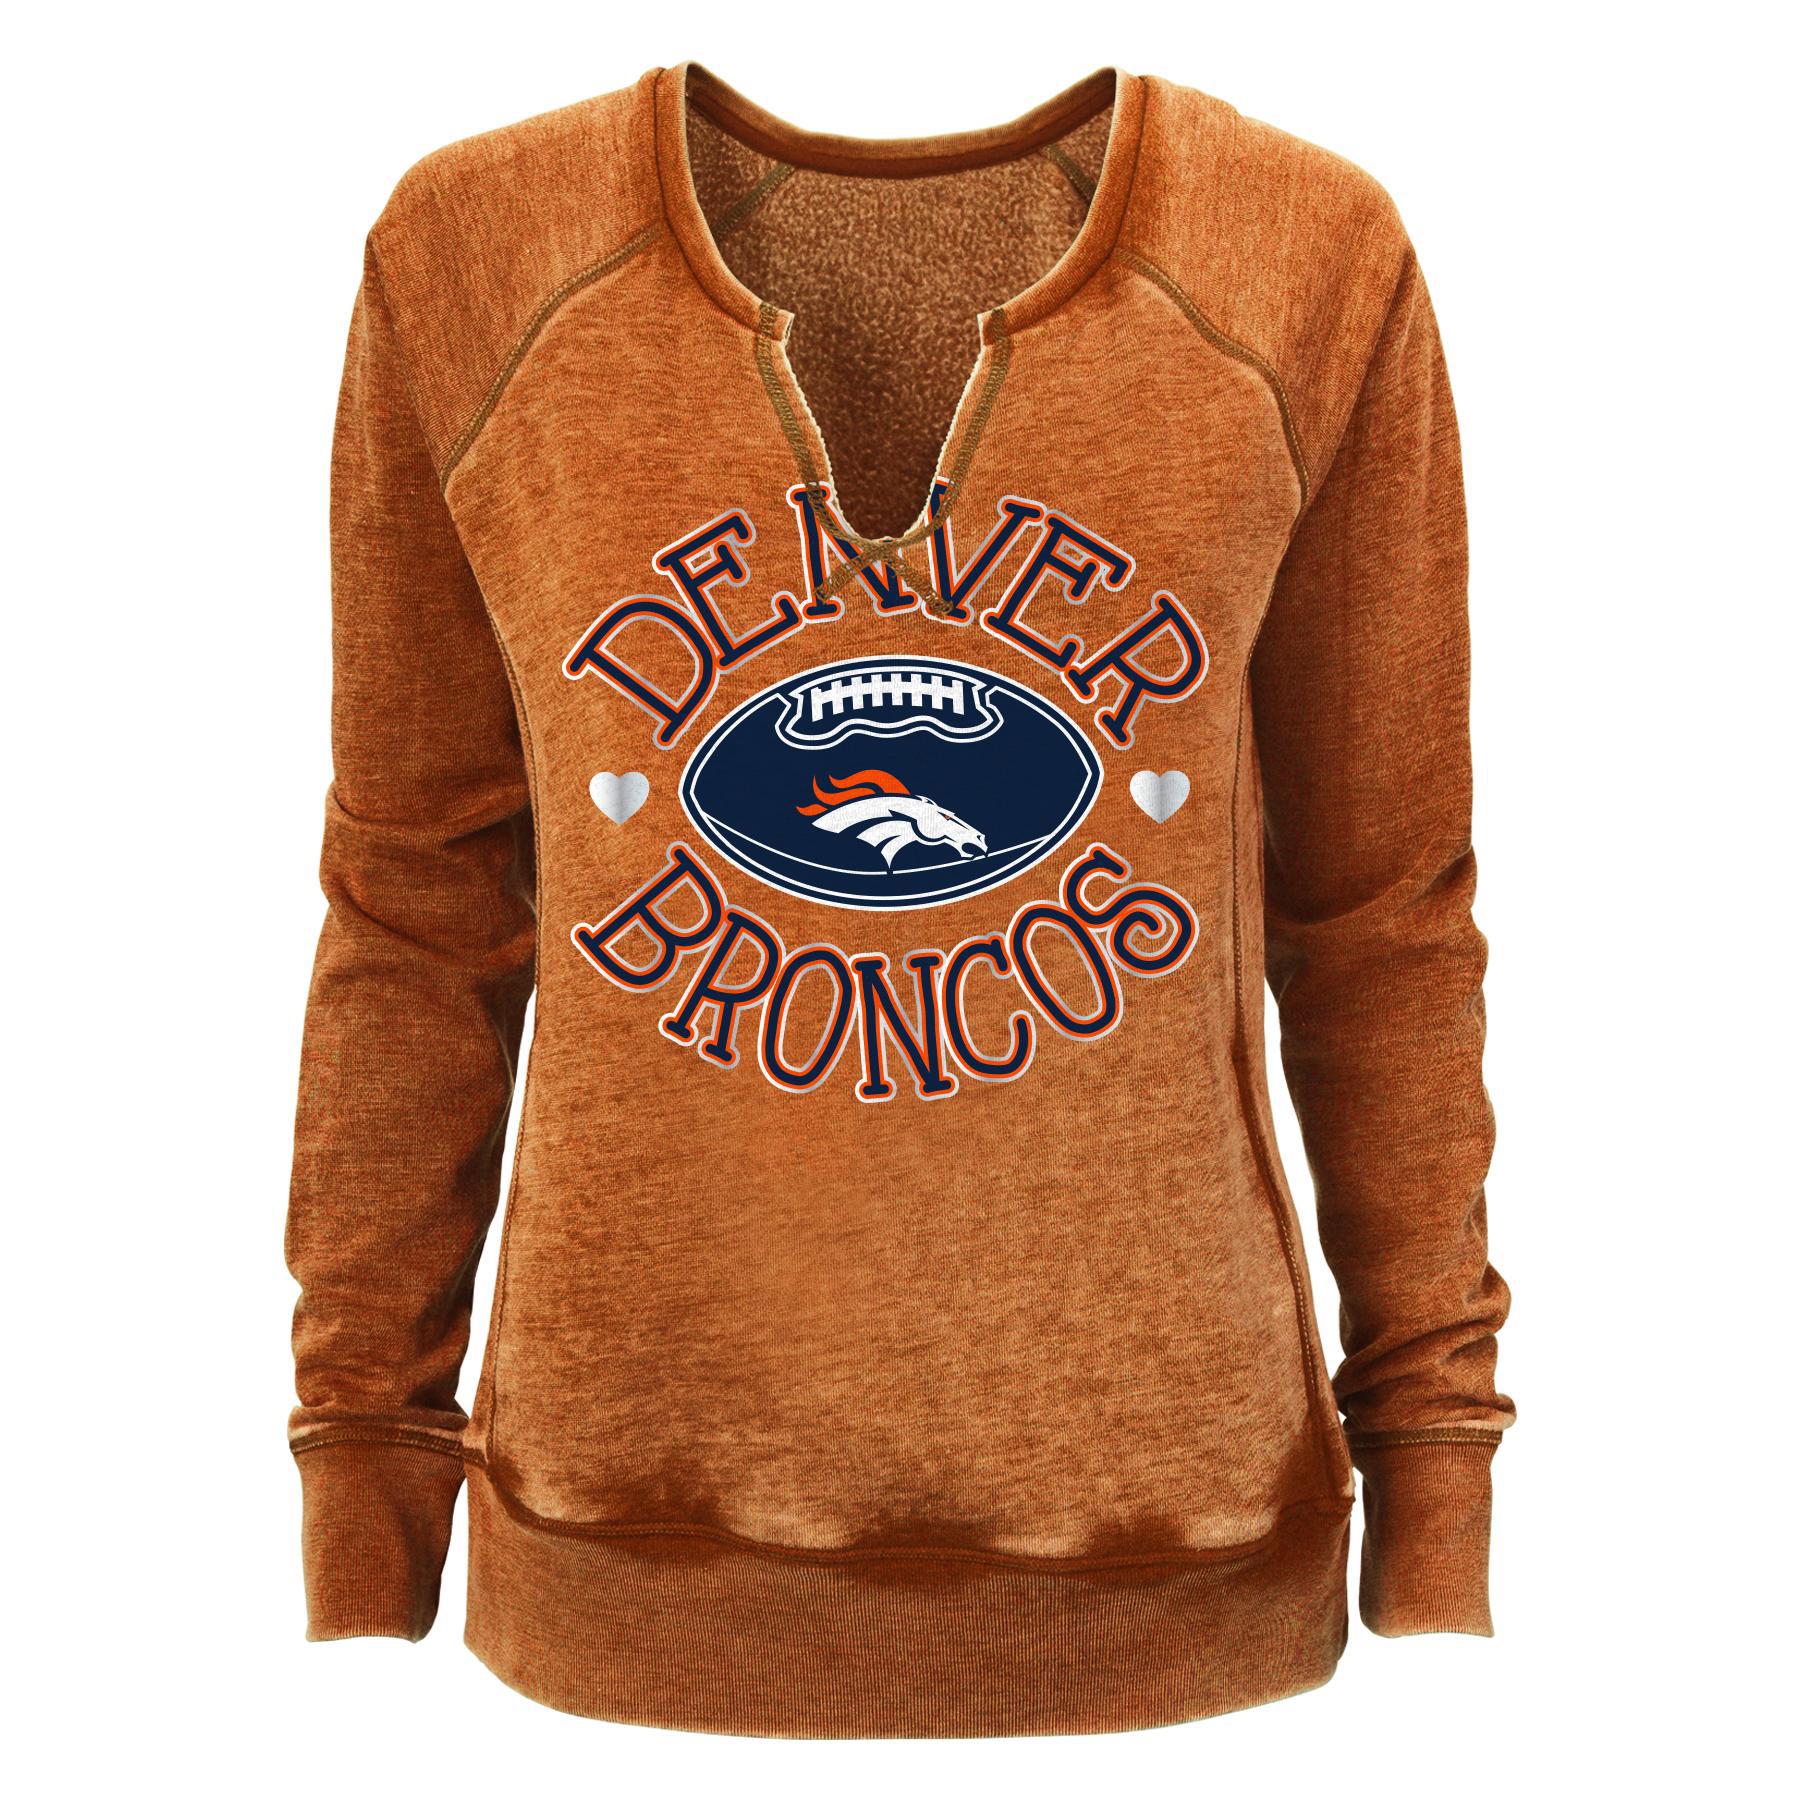 NFL Juniors' Fleece Top - Denver Broncos